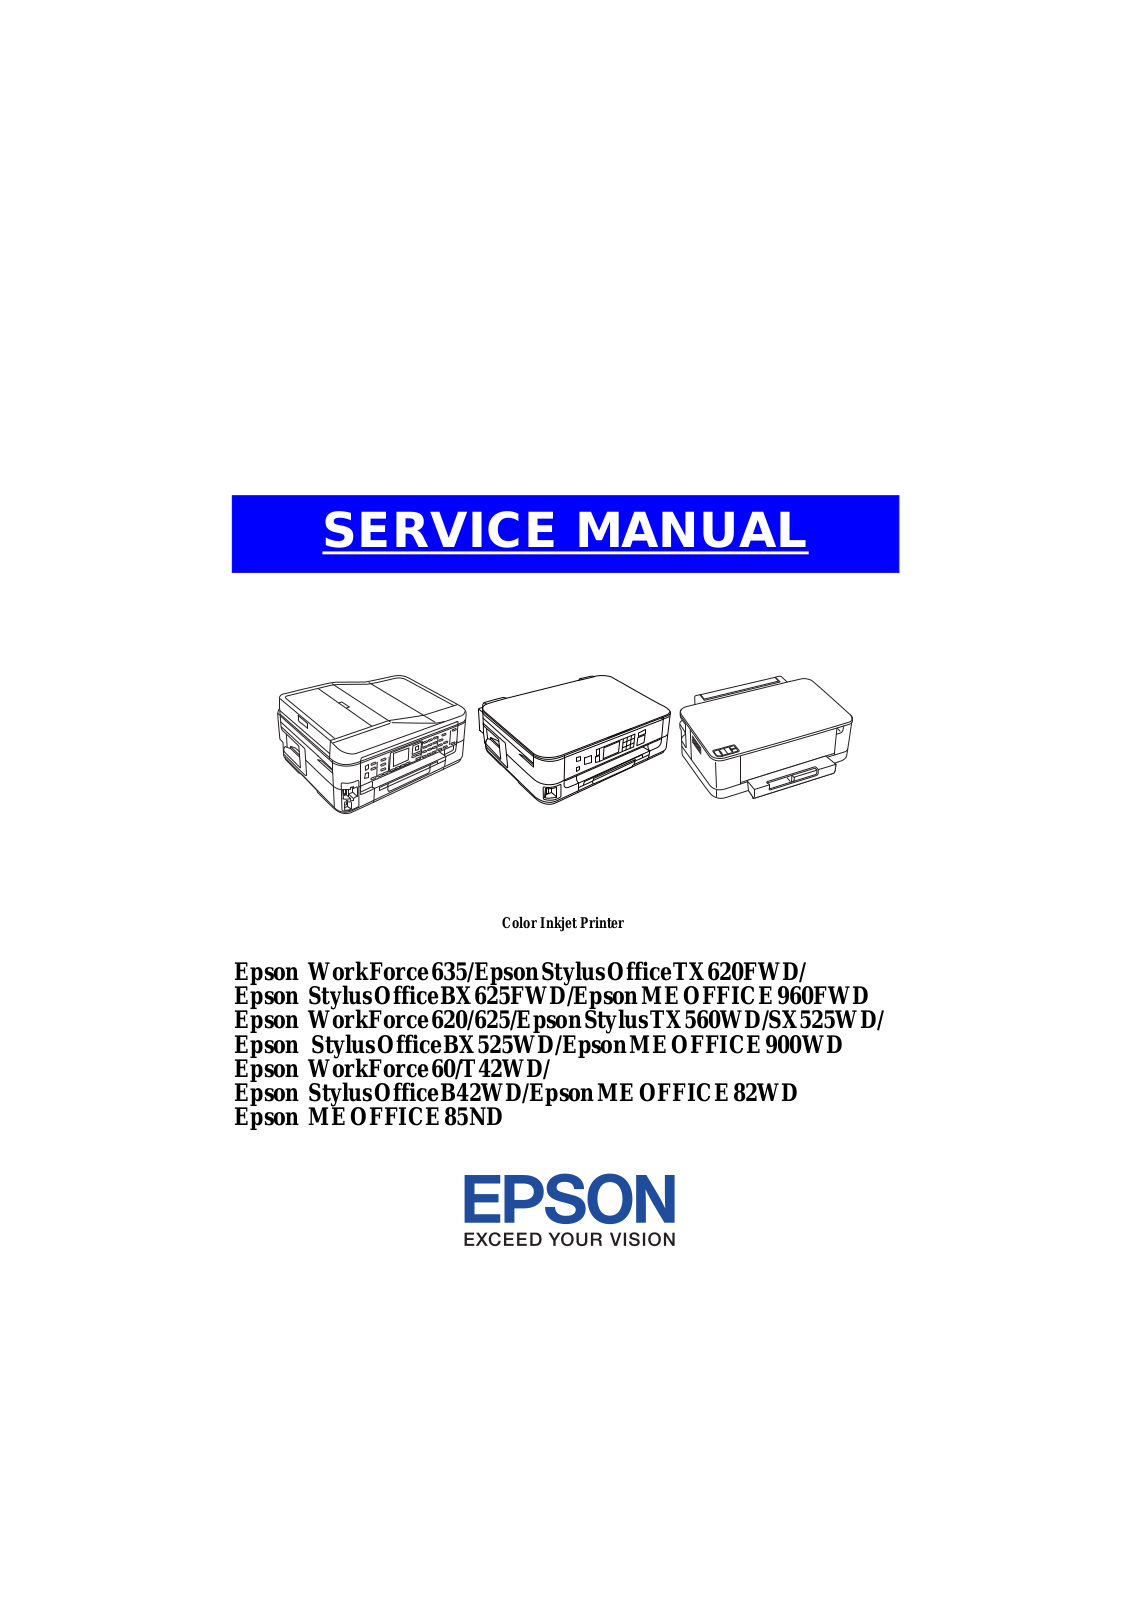 Epson WorkForce 635, WorkForce 620, WorkForce 60 Service Manual